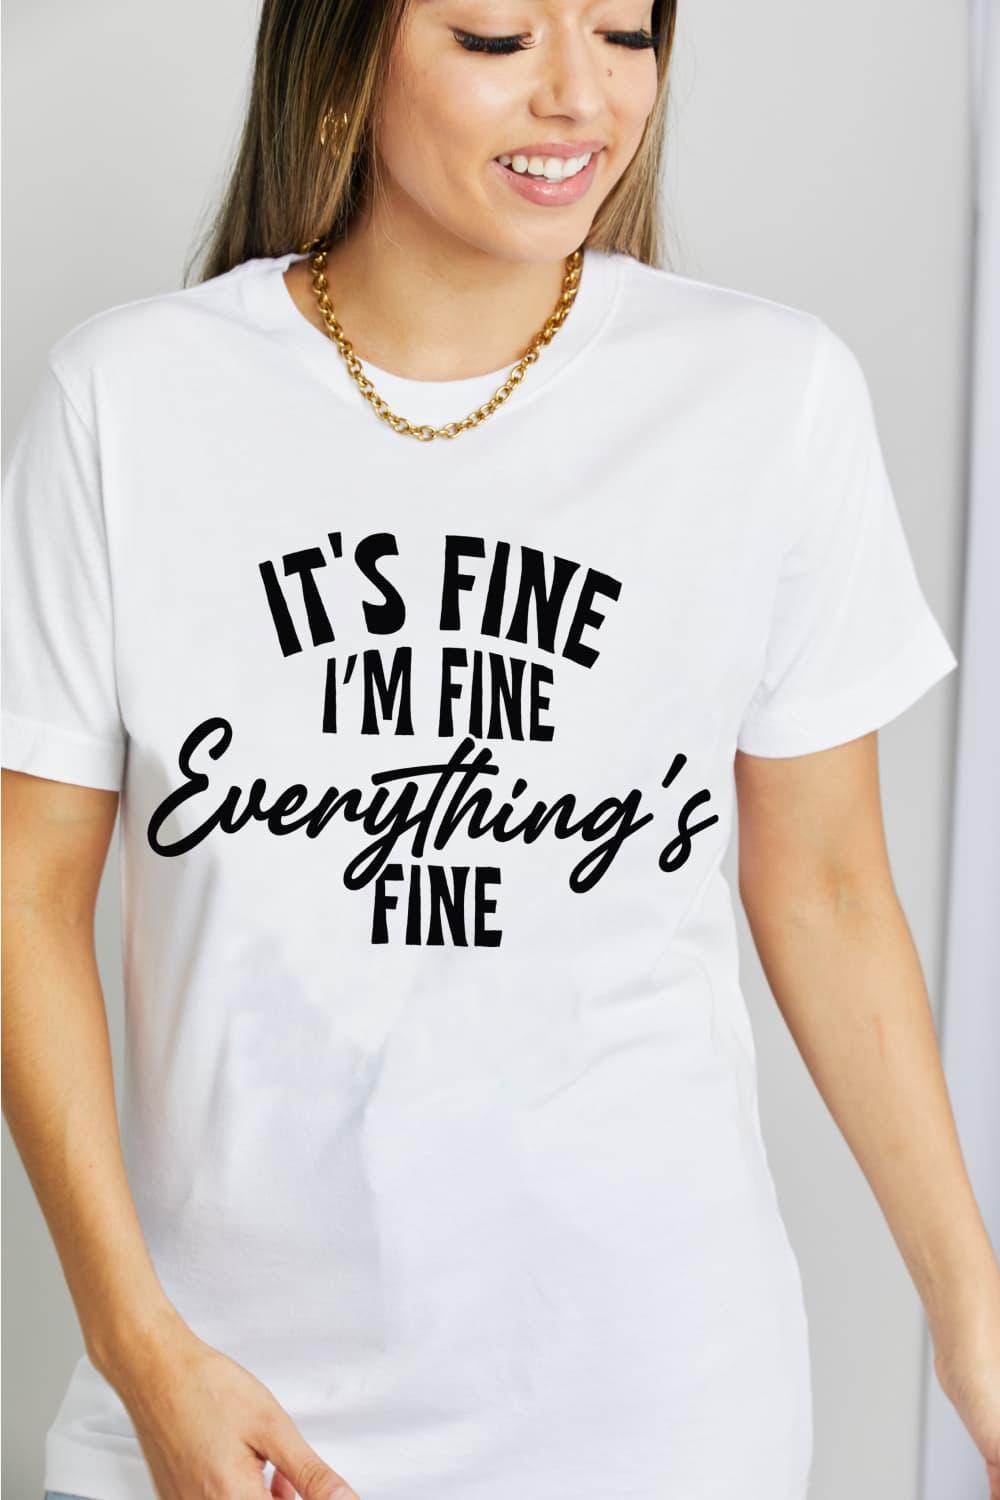 IT'S FINE I'M FINE EVERYTHING'S FINE Graphic Cotton T-Shirt - Lab Fashion, Home & Health